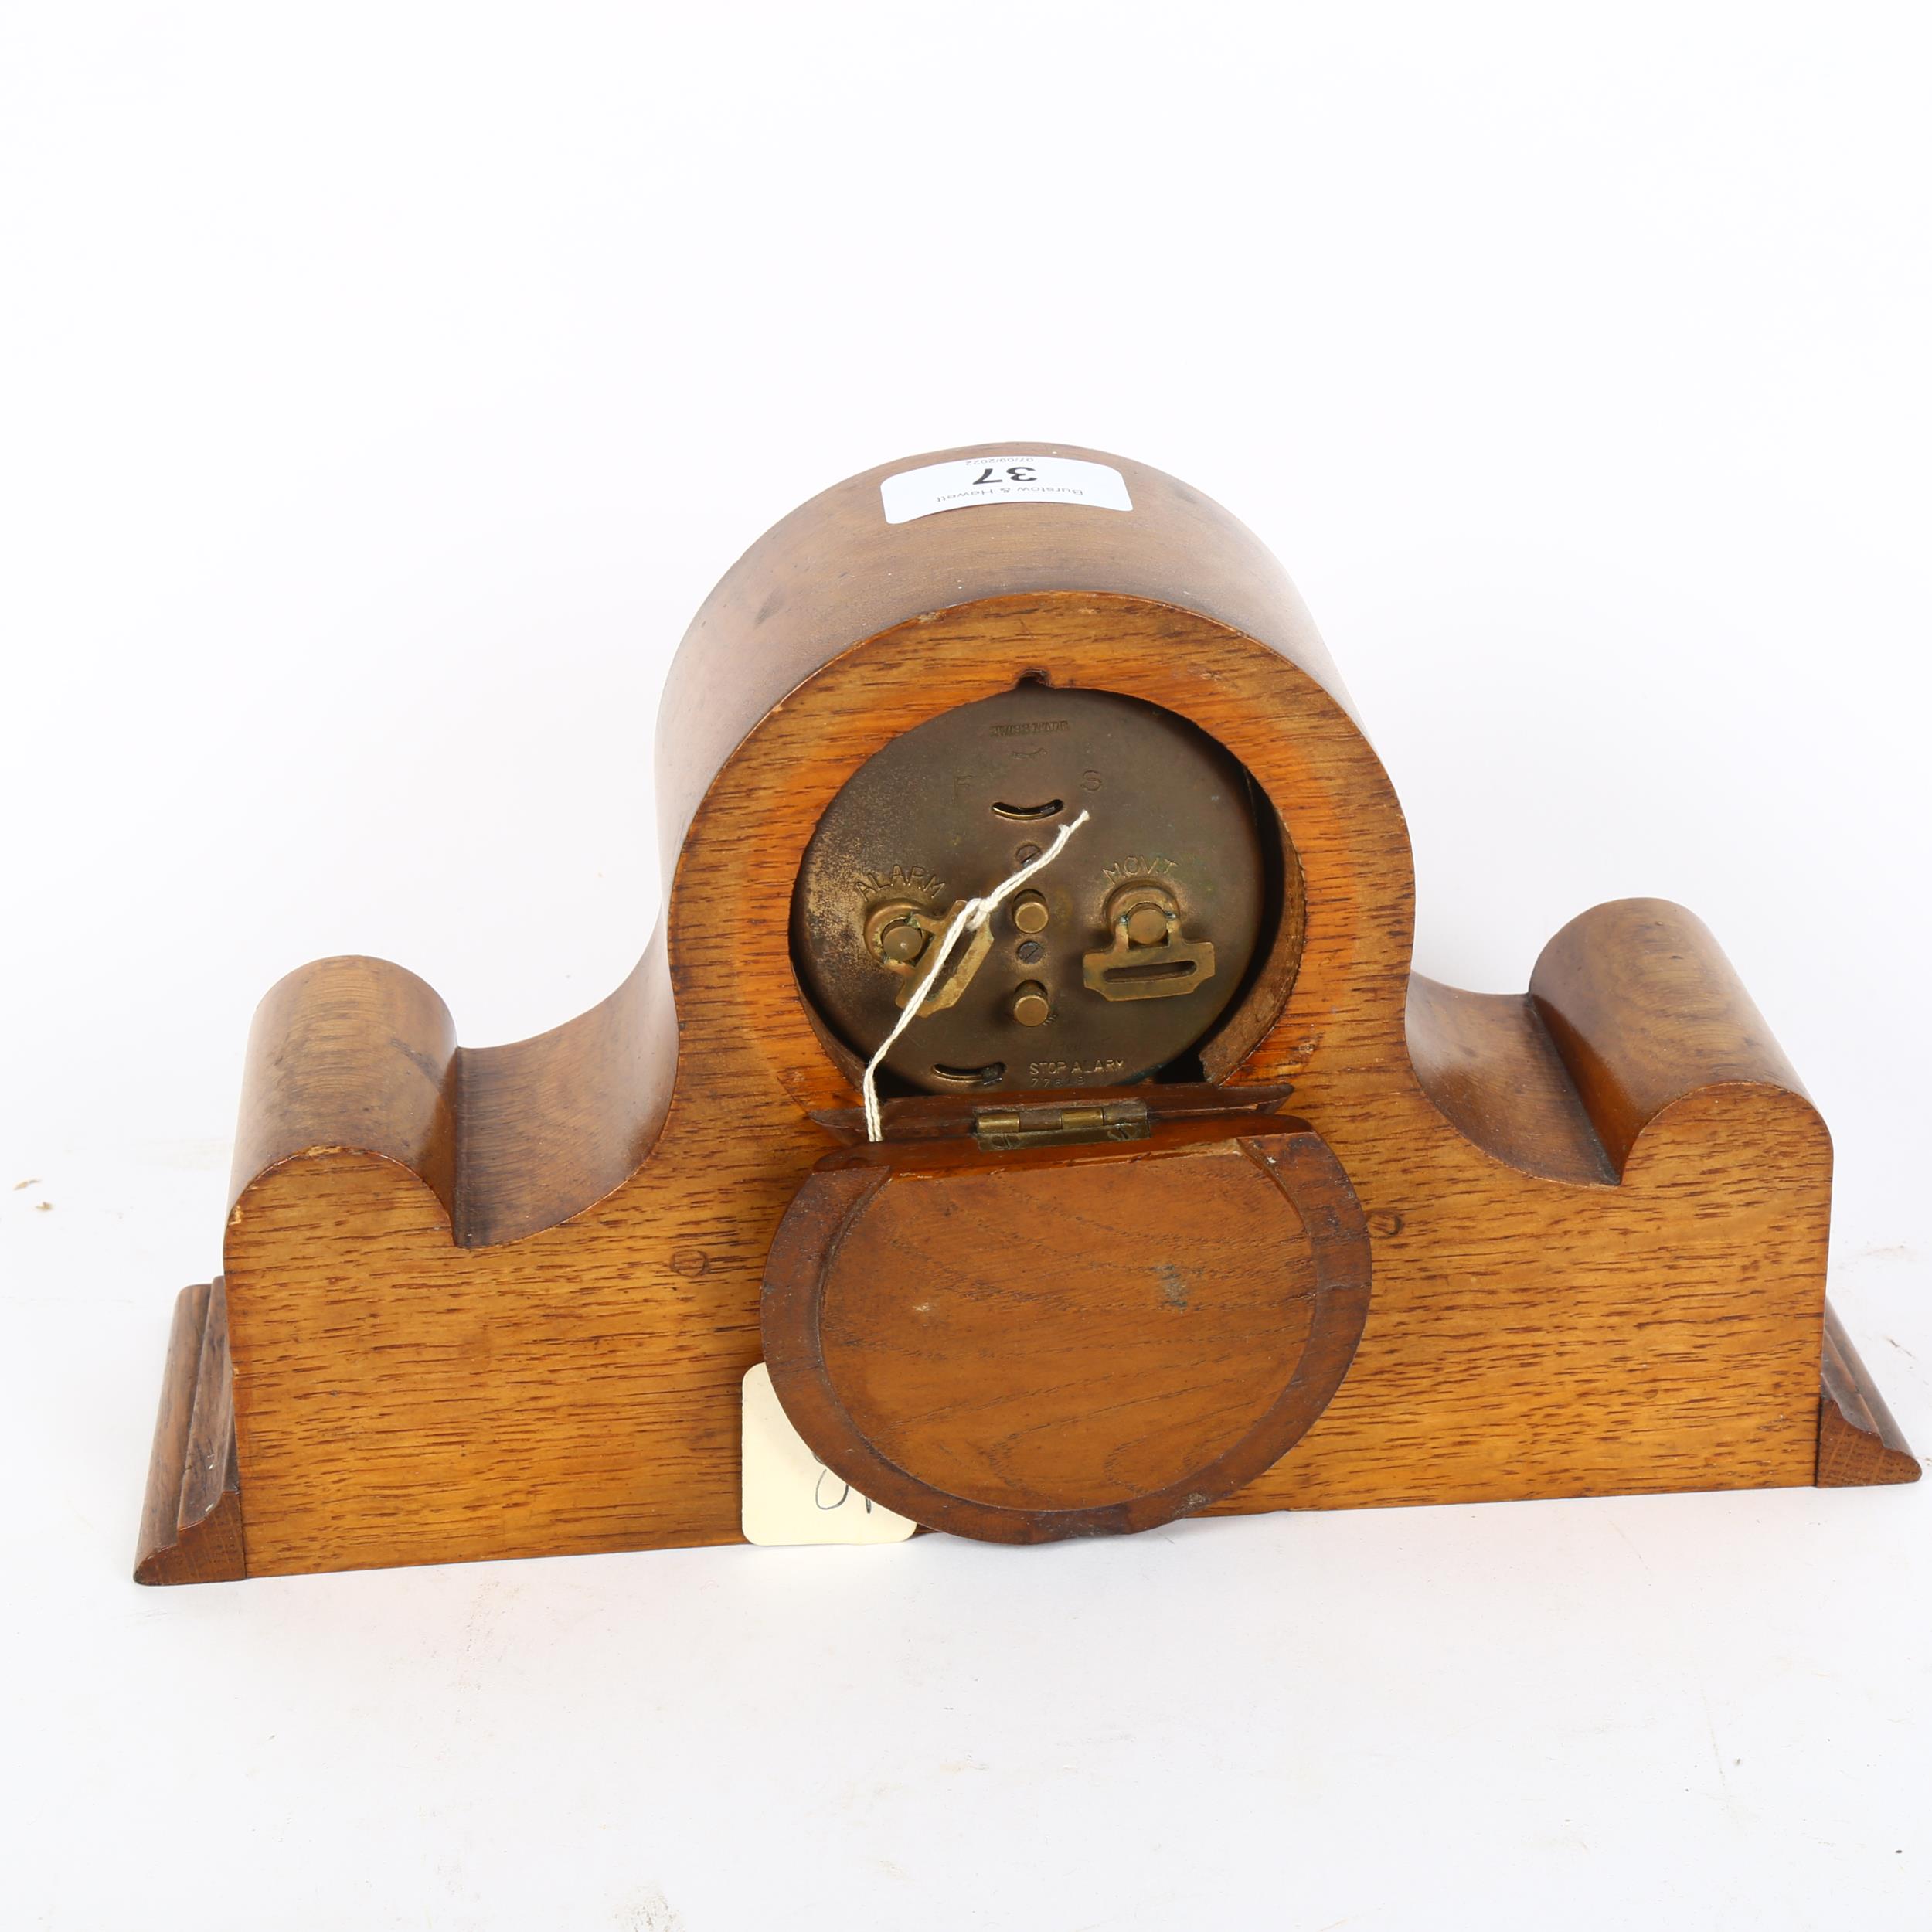 J W BENSON - an early 20th century light oak drum alarm mantel clock, Arabic numerals with - Image 2 of 2